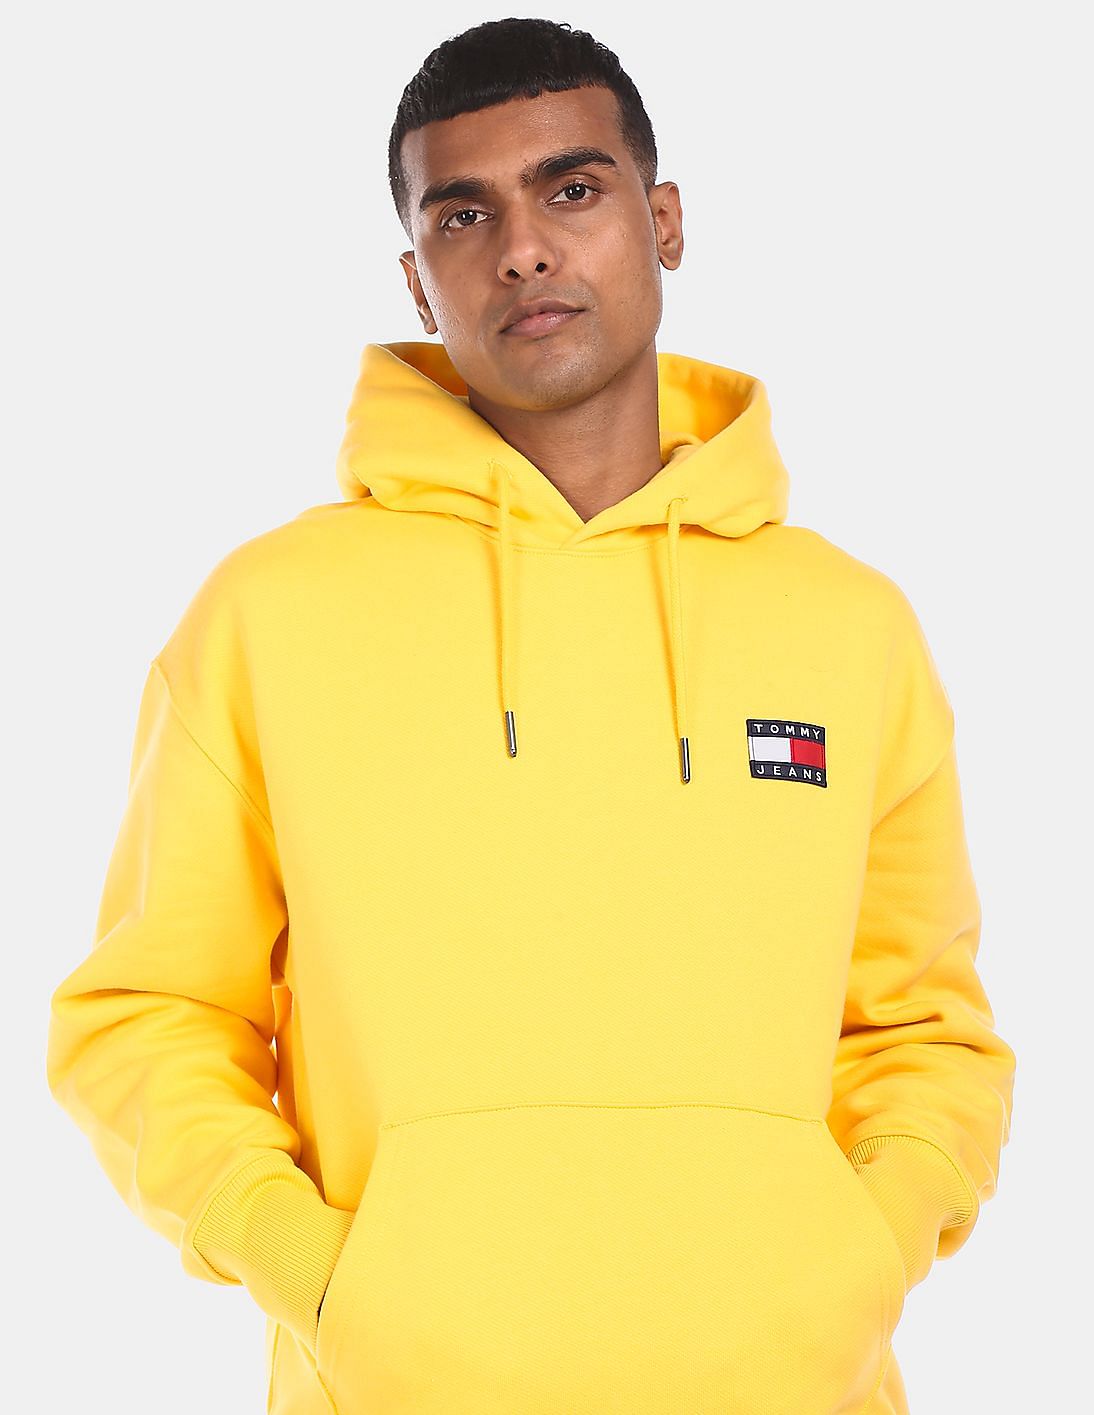 hilfiger yellow hoodie